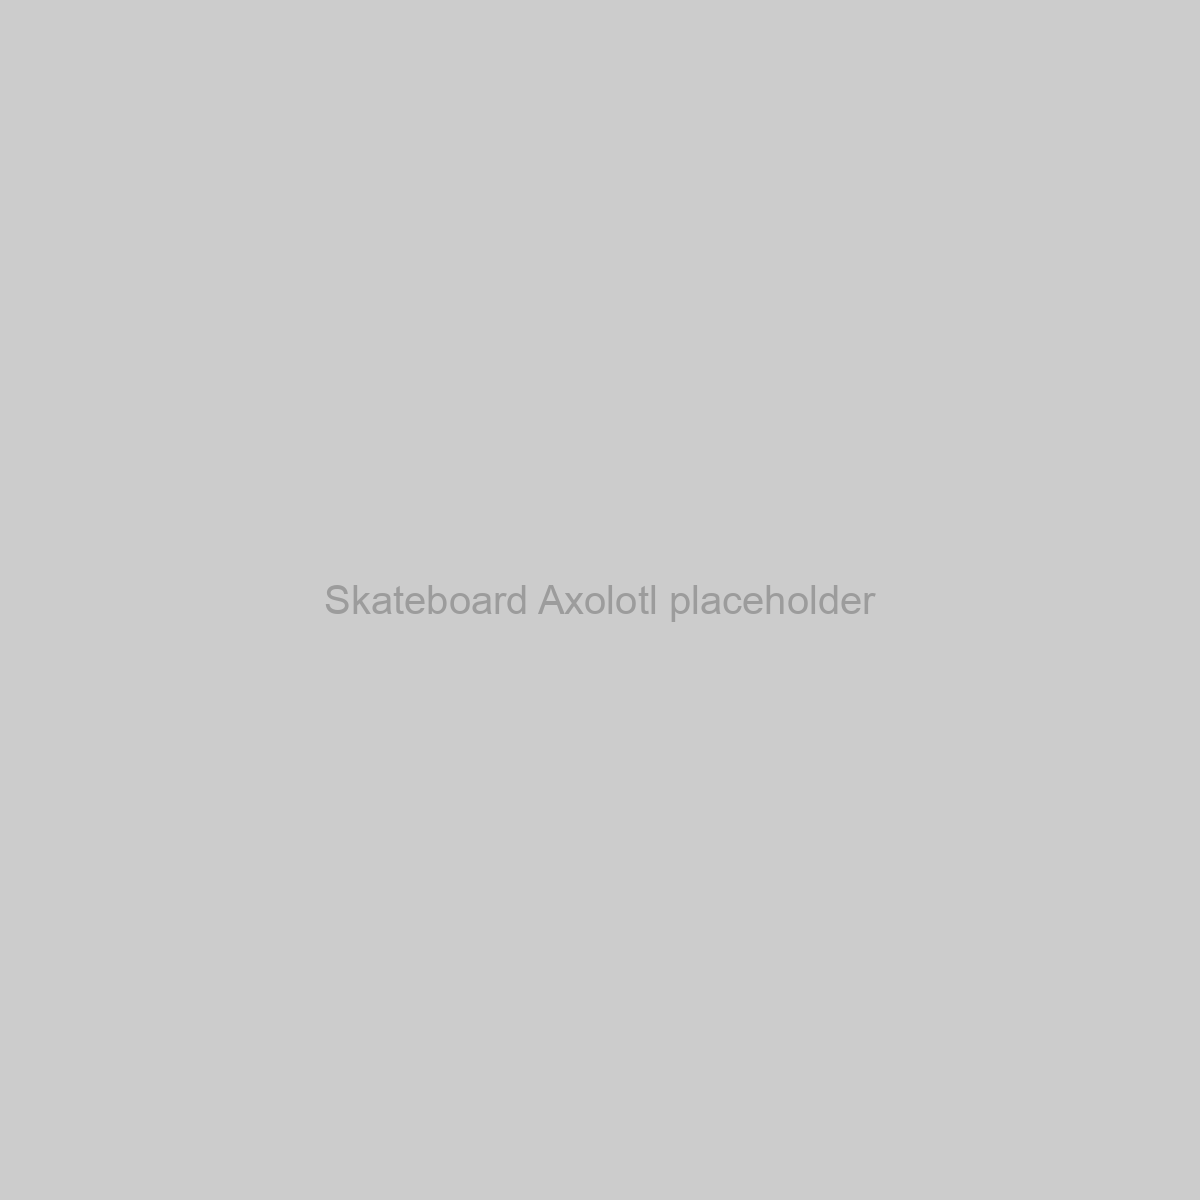 Skateboard Axolotl Placeholder Image